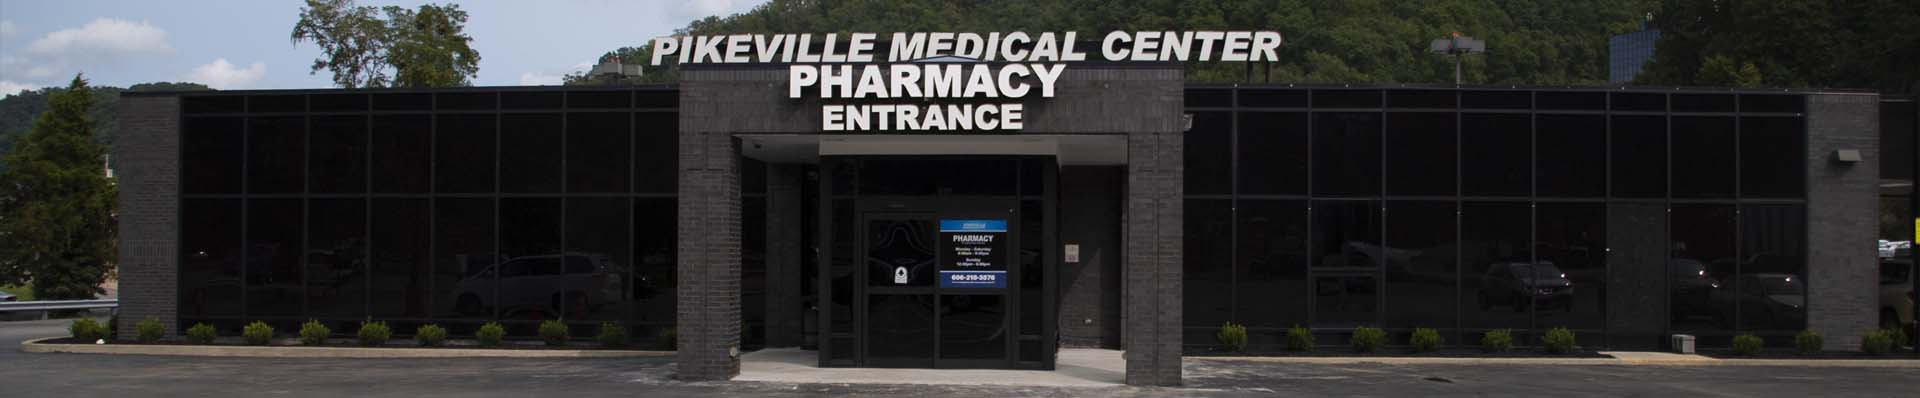 Pikeville Medical Center Pharmacy